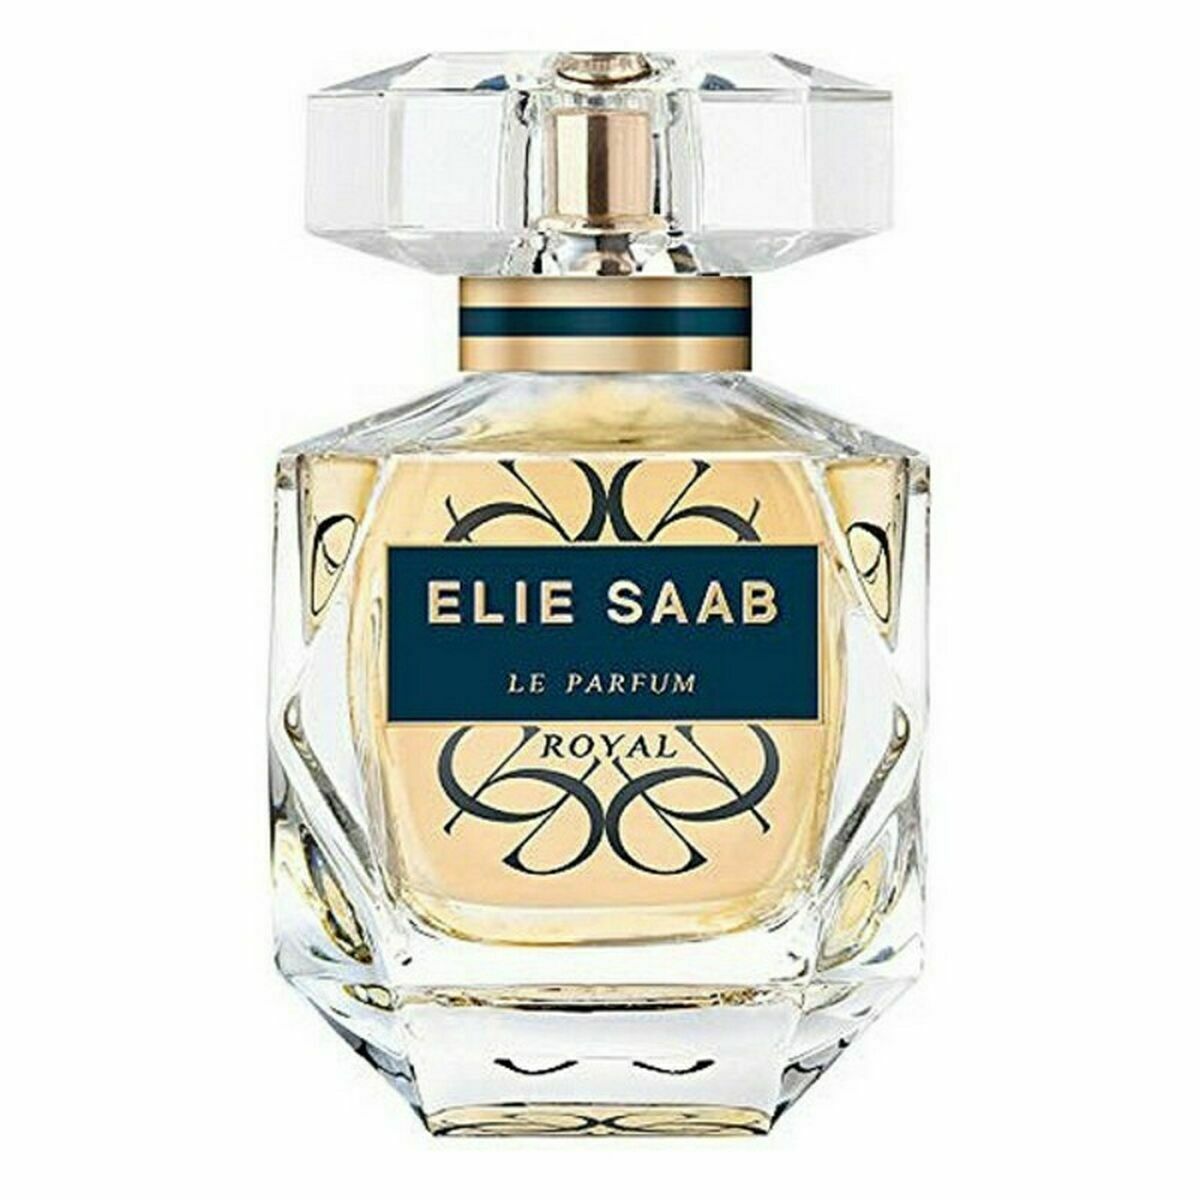 Kaufe Le Parfum Royal Elie Saab EDP - Damen bei AWK Flagship um € 85.00